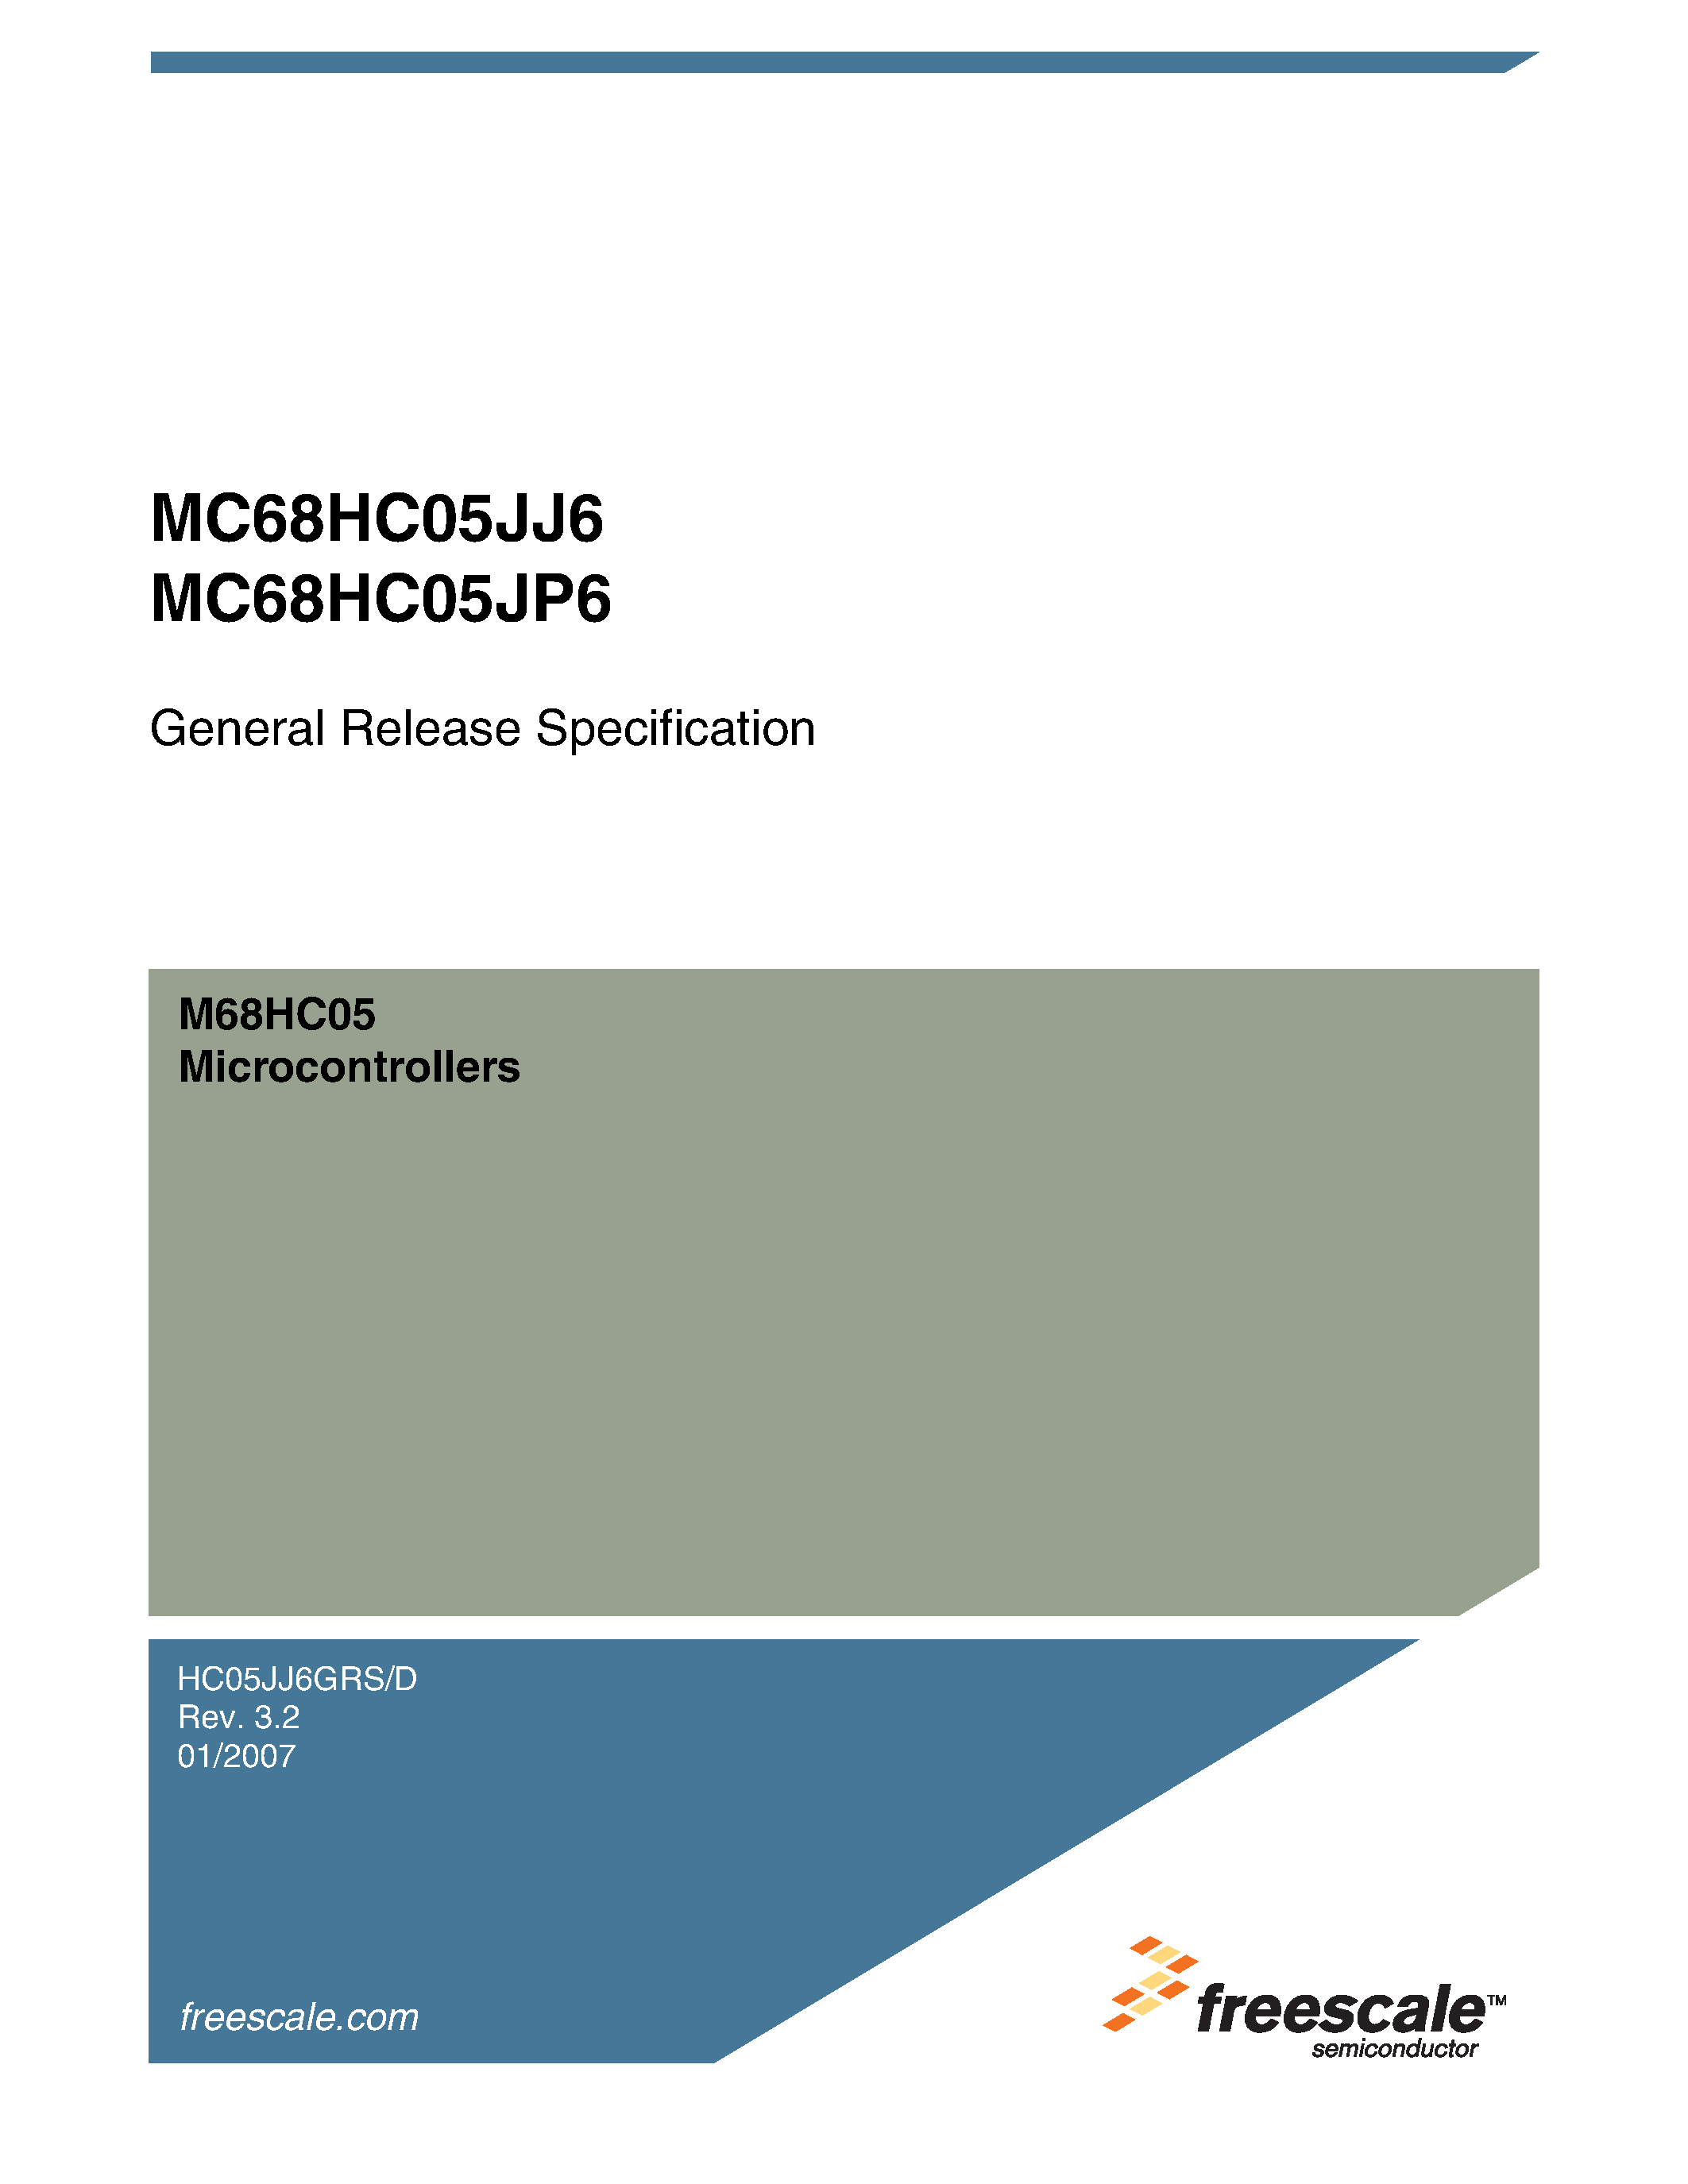 Datasheet MC68HC05JJ6 - (MC68HC05JJ6 / MC68HC05JP6) General Release Specification Microcontrollers page 1